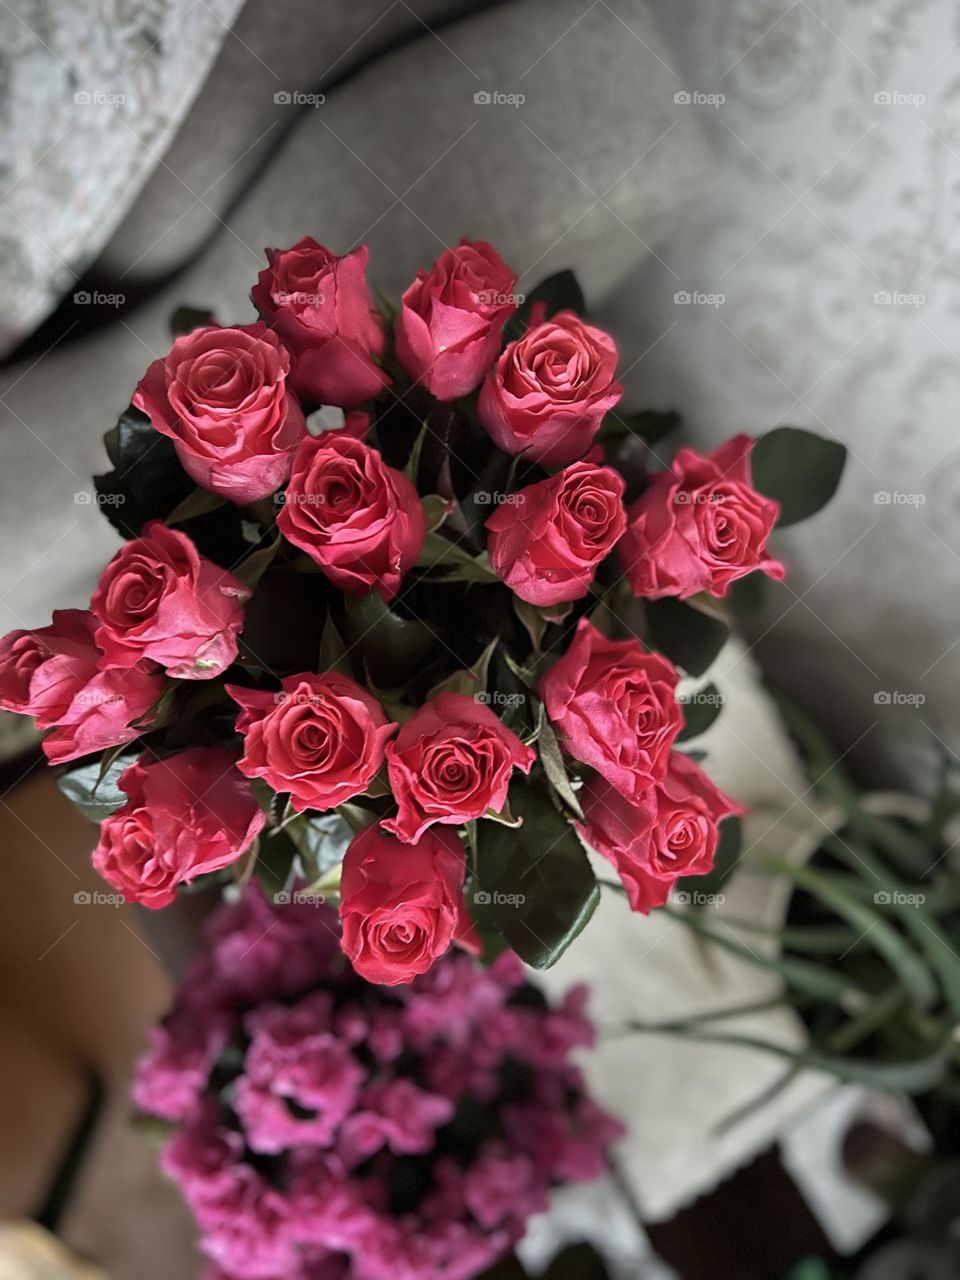 Roses for mum 